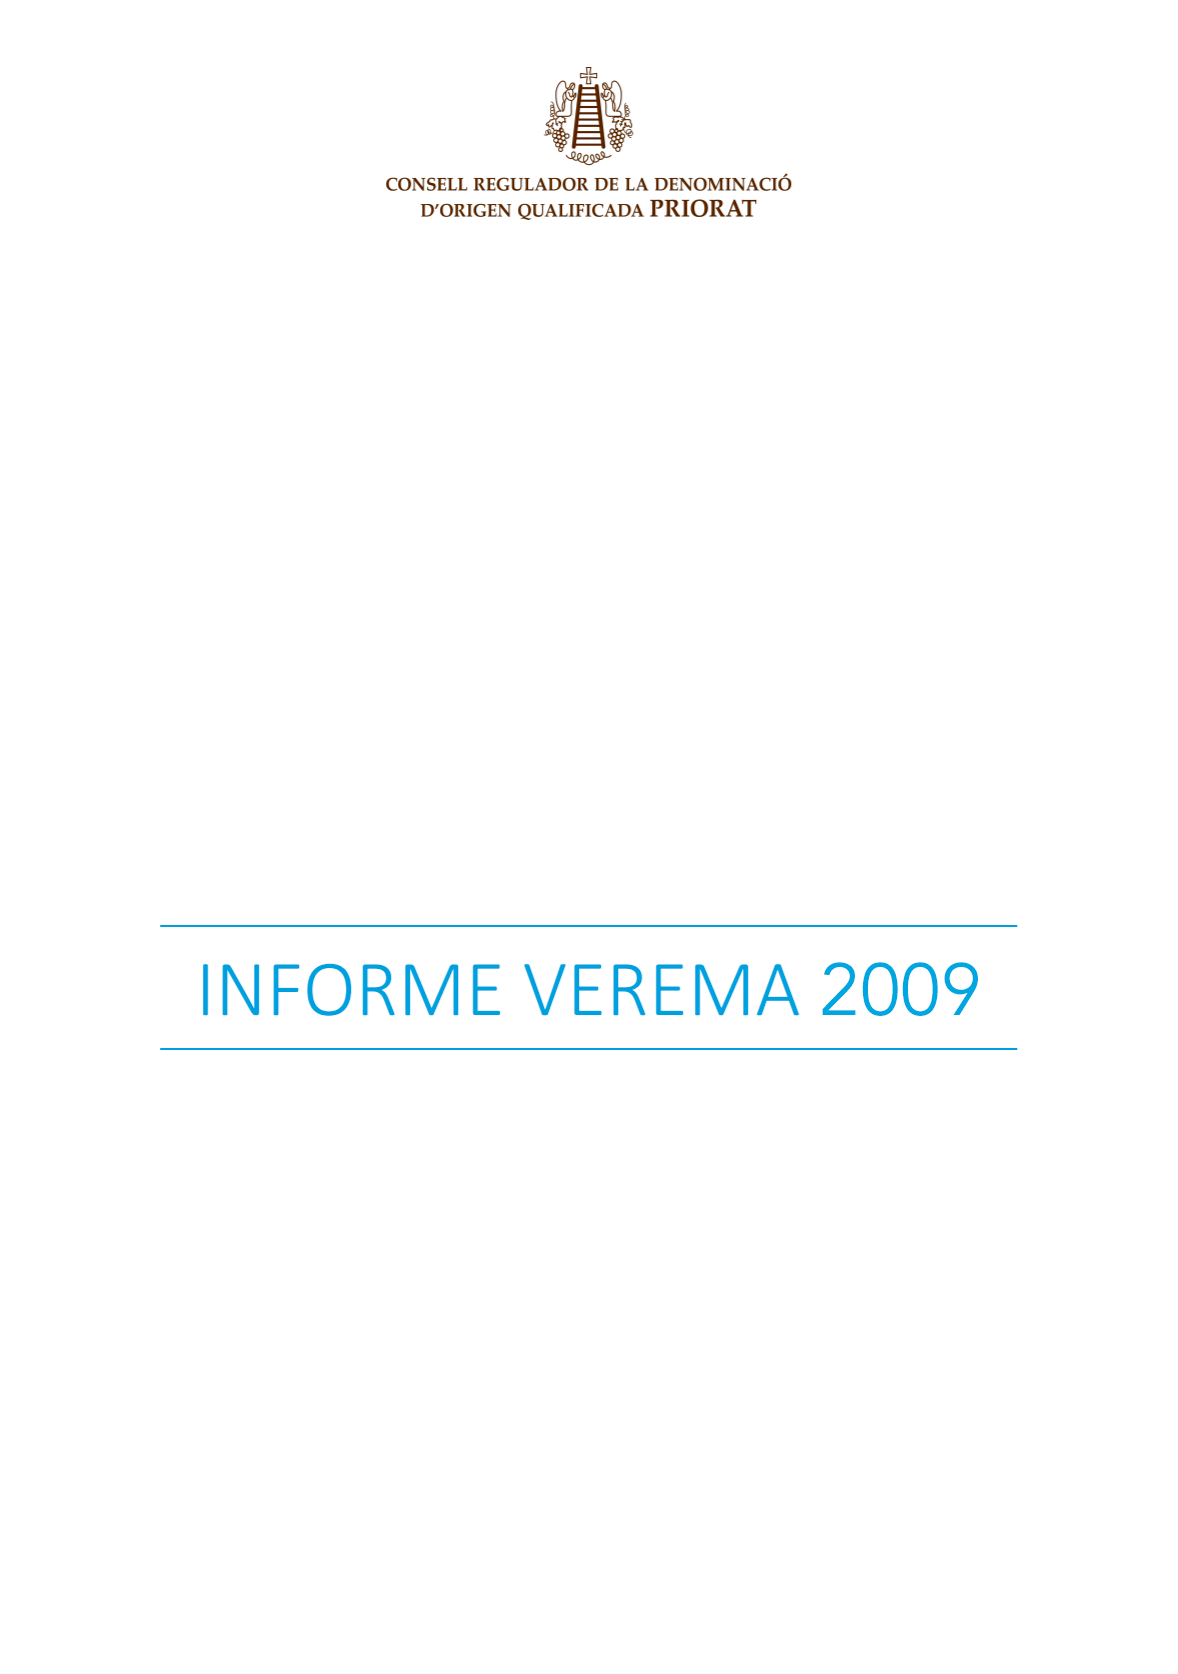 Informe de verema 2009